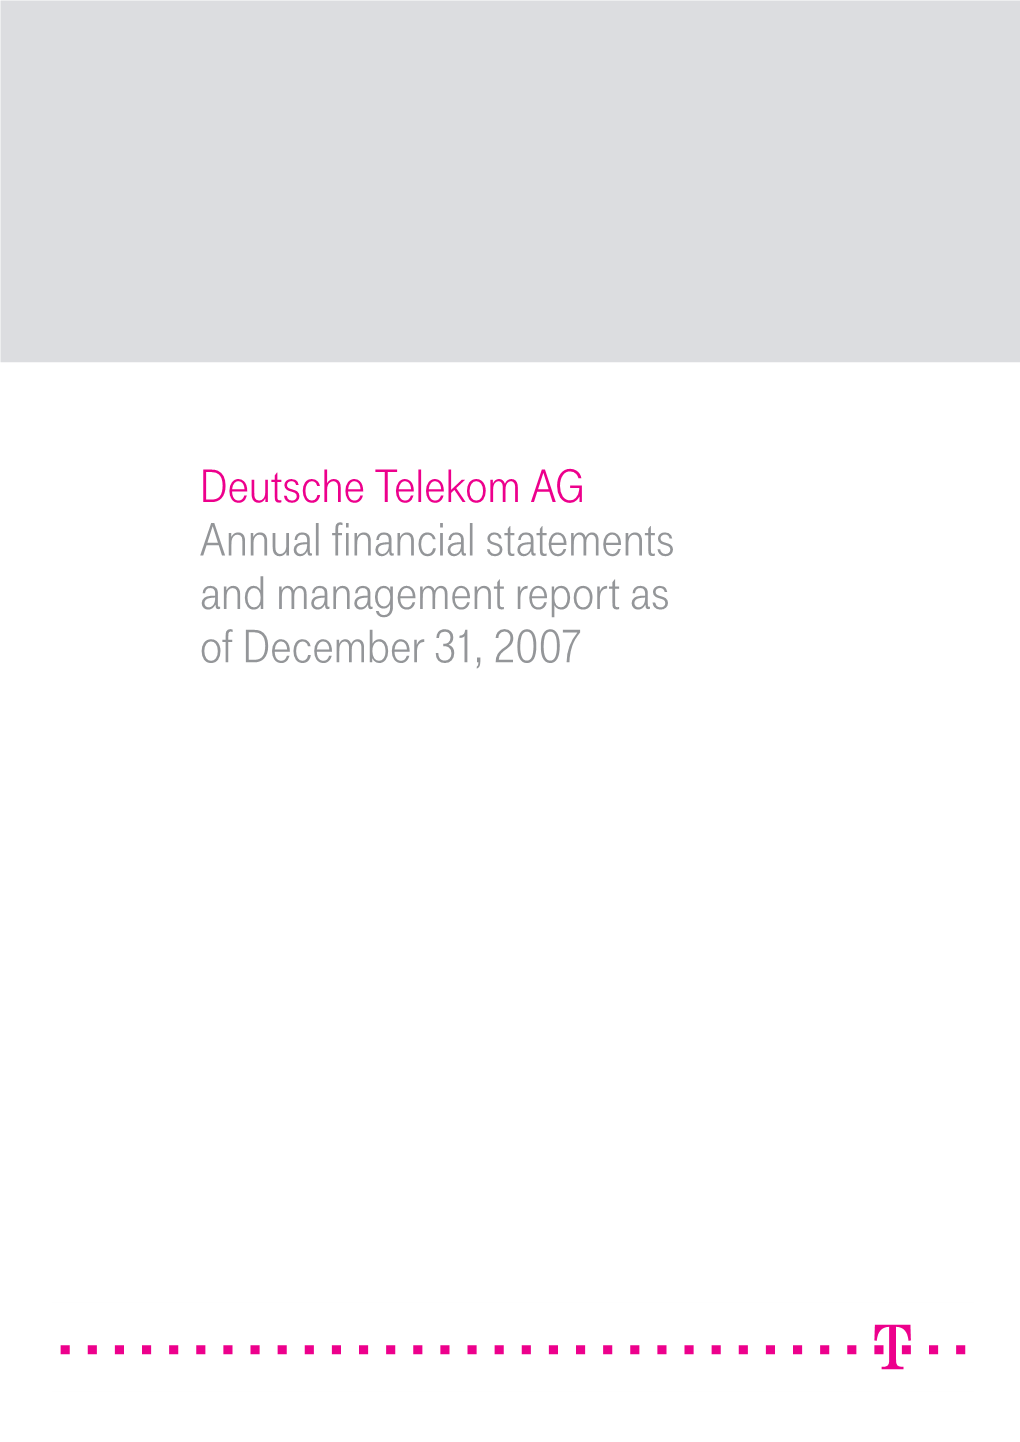 Financial Statement 2007 (Pdf, 593.2